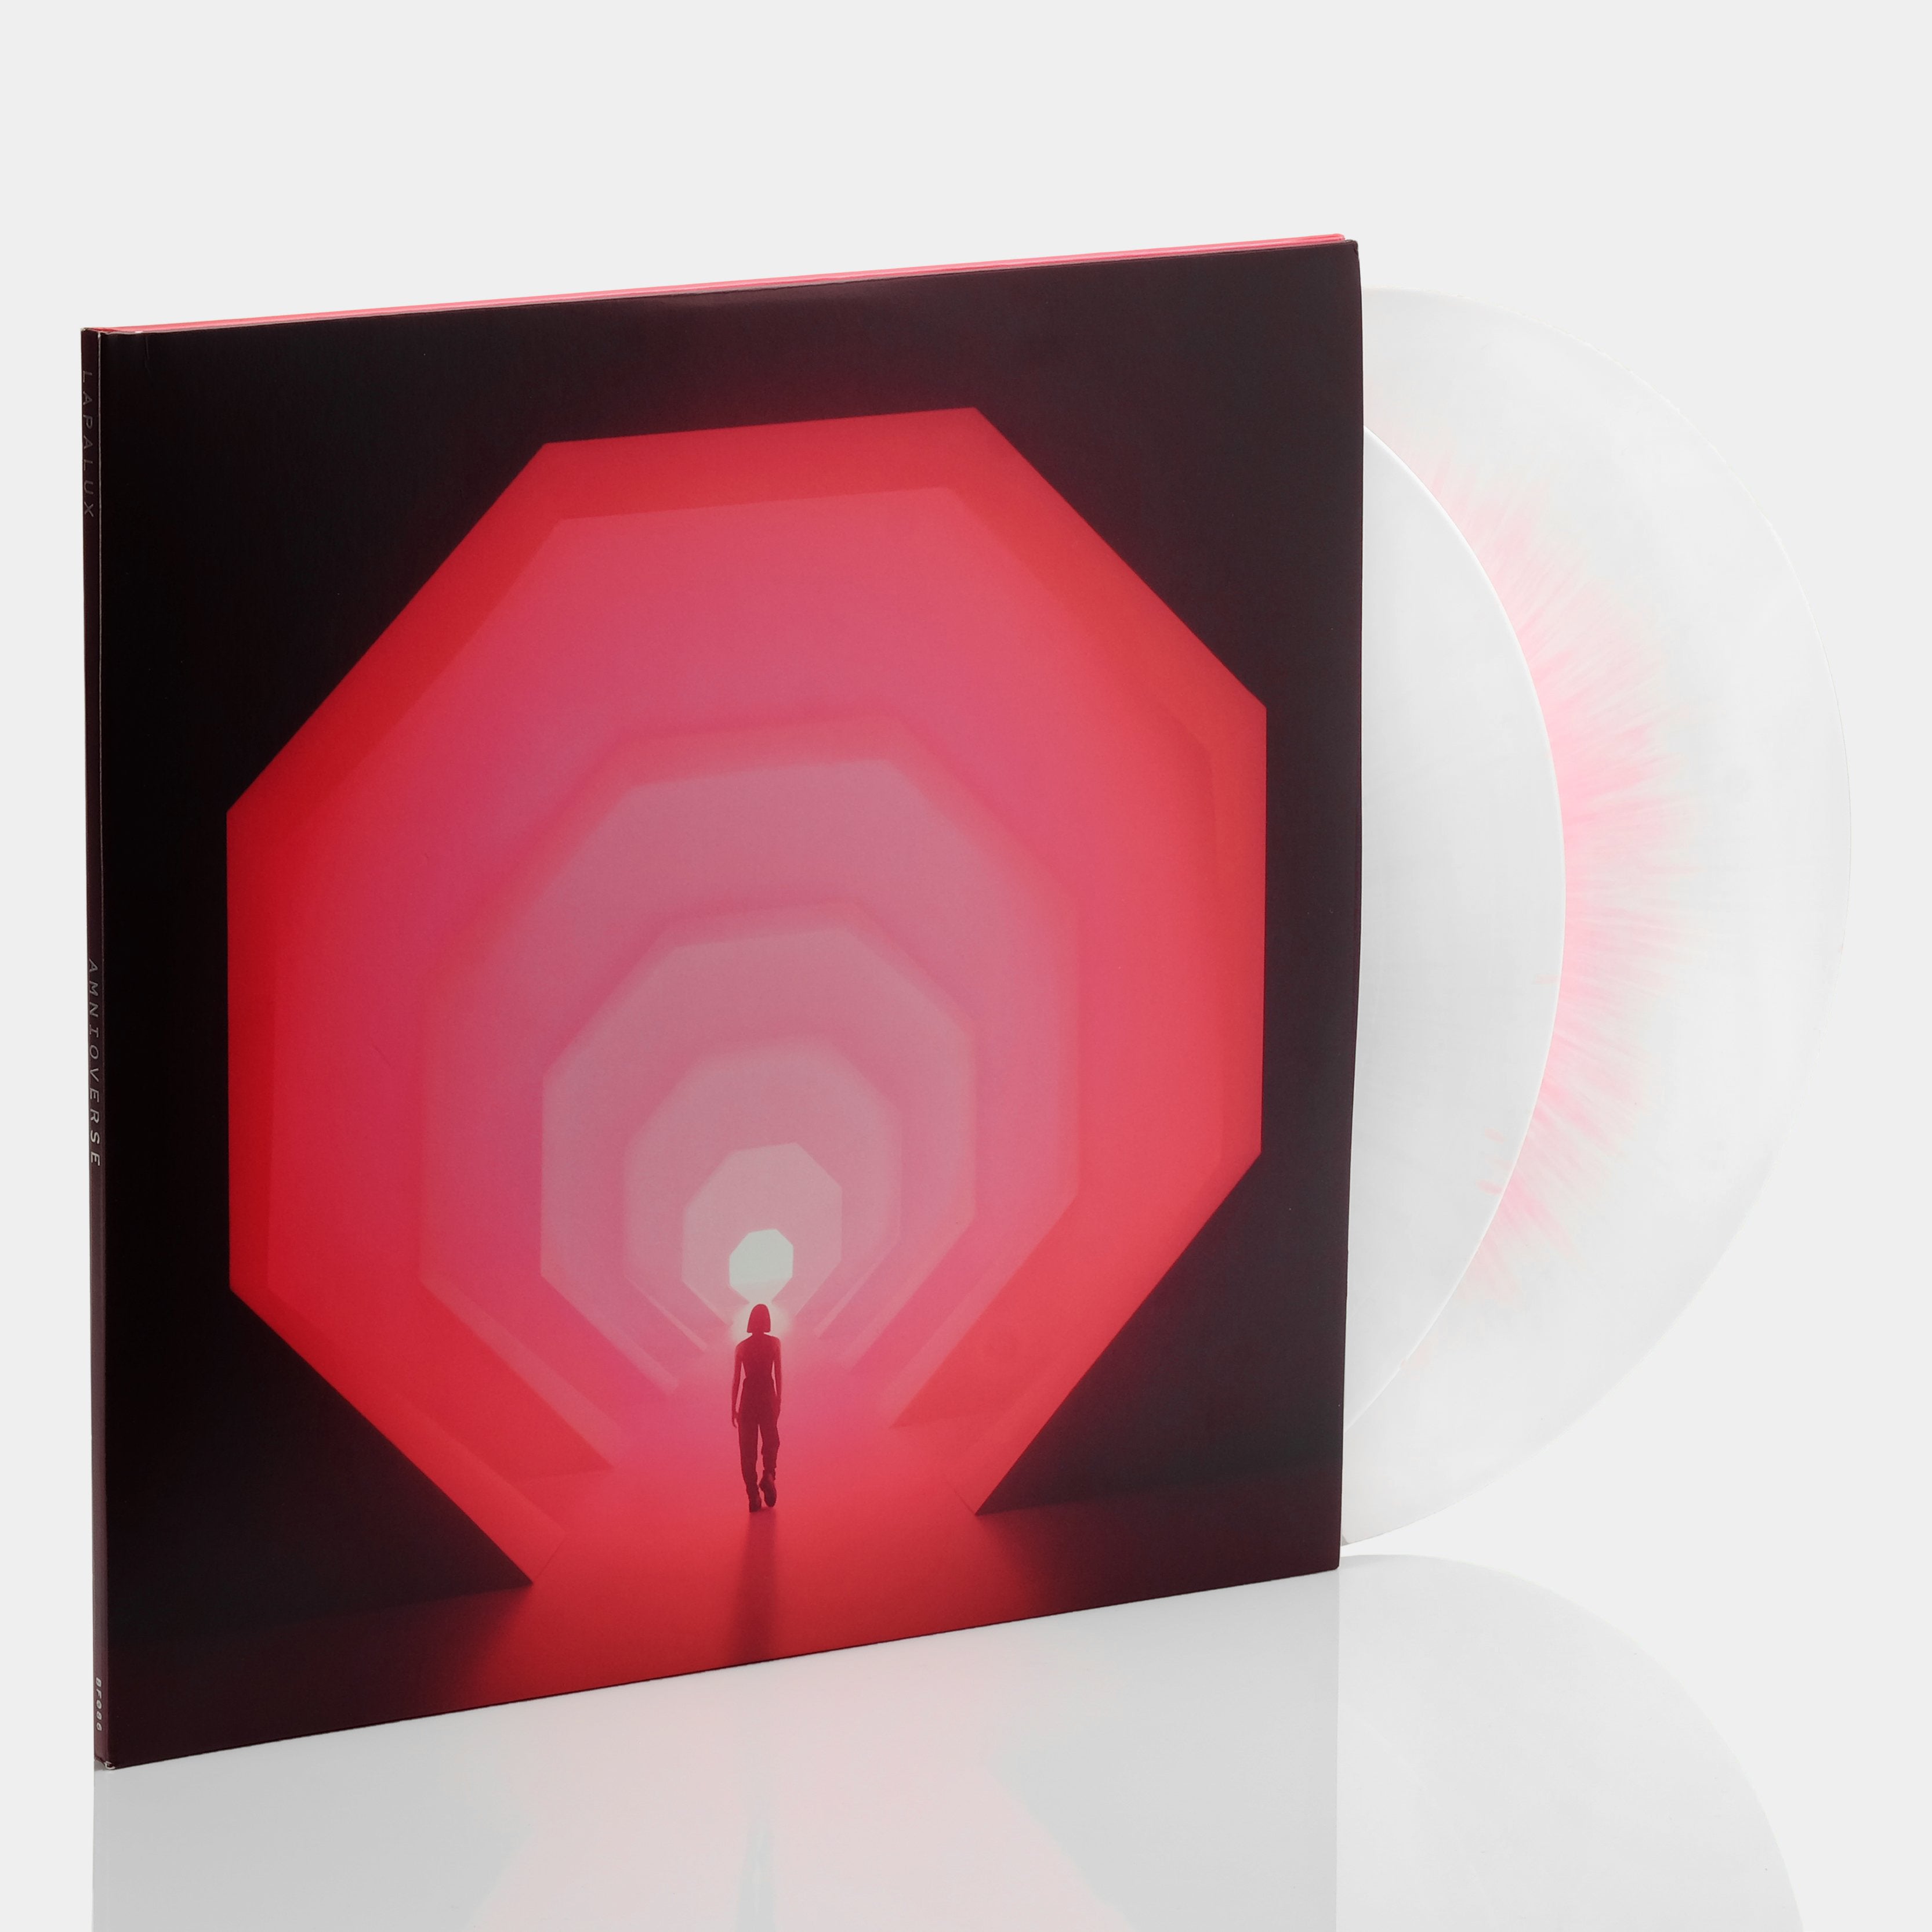 Lapalux - Amnioverse LP White & Pink Splatter Vinyl Record